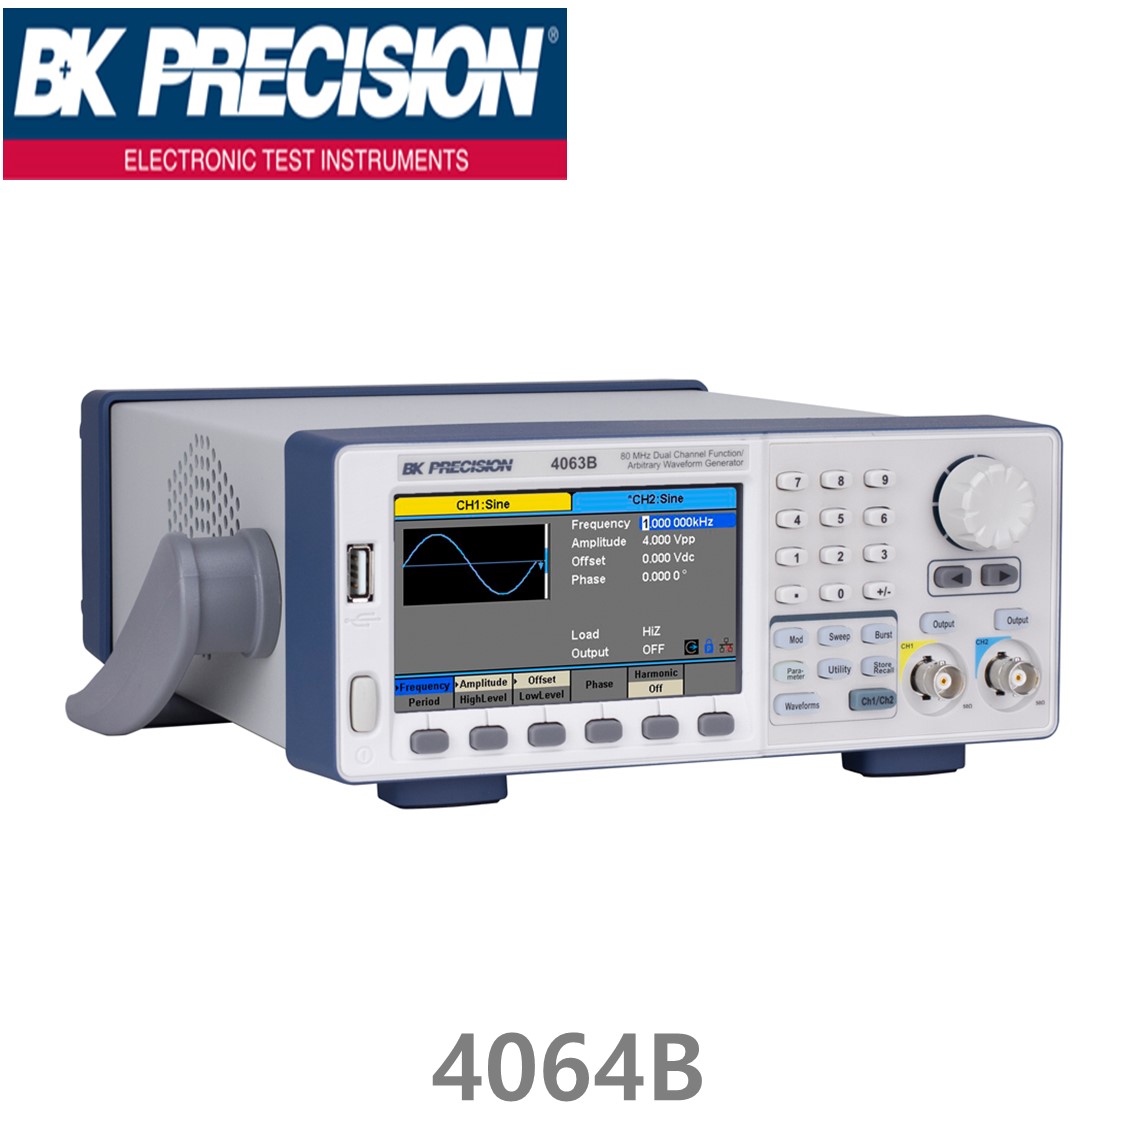 [ BK PRECISION ] BK 4064B, 120MHz Dual Channel Function Arbitrary Waveform Generators, 임의 파형 발생기, B&K 4064B